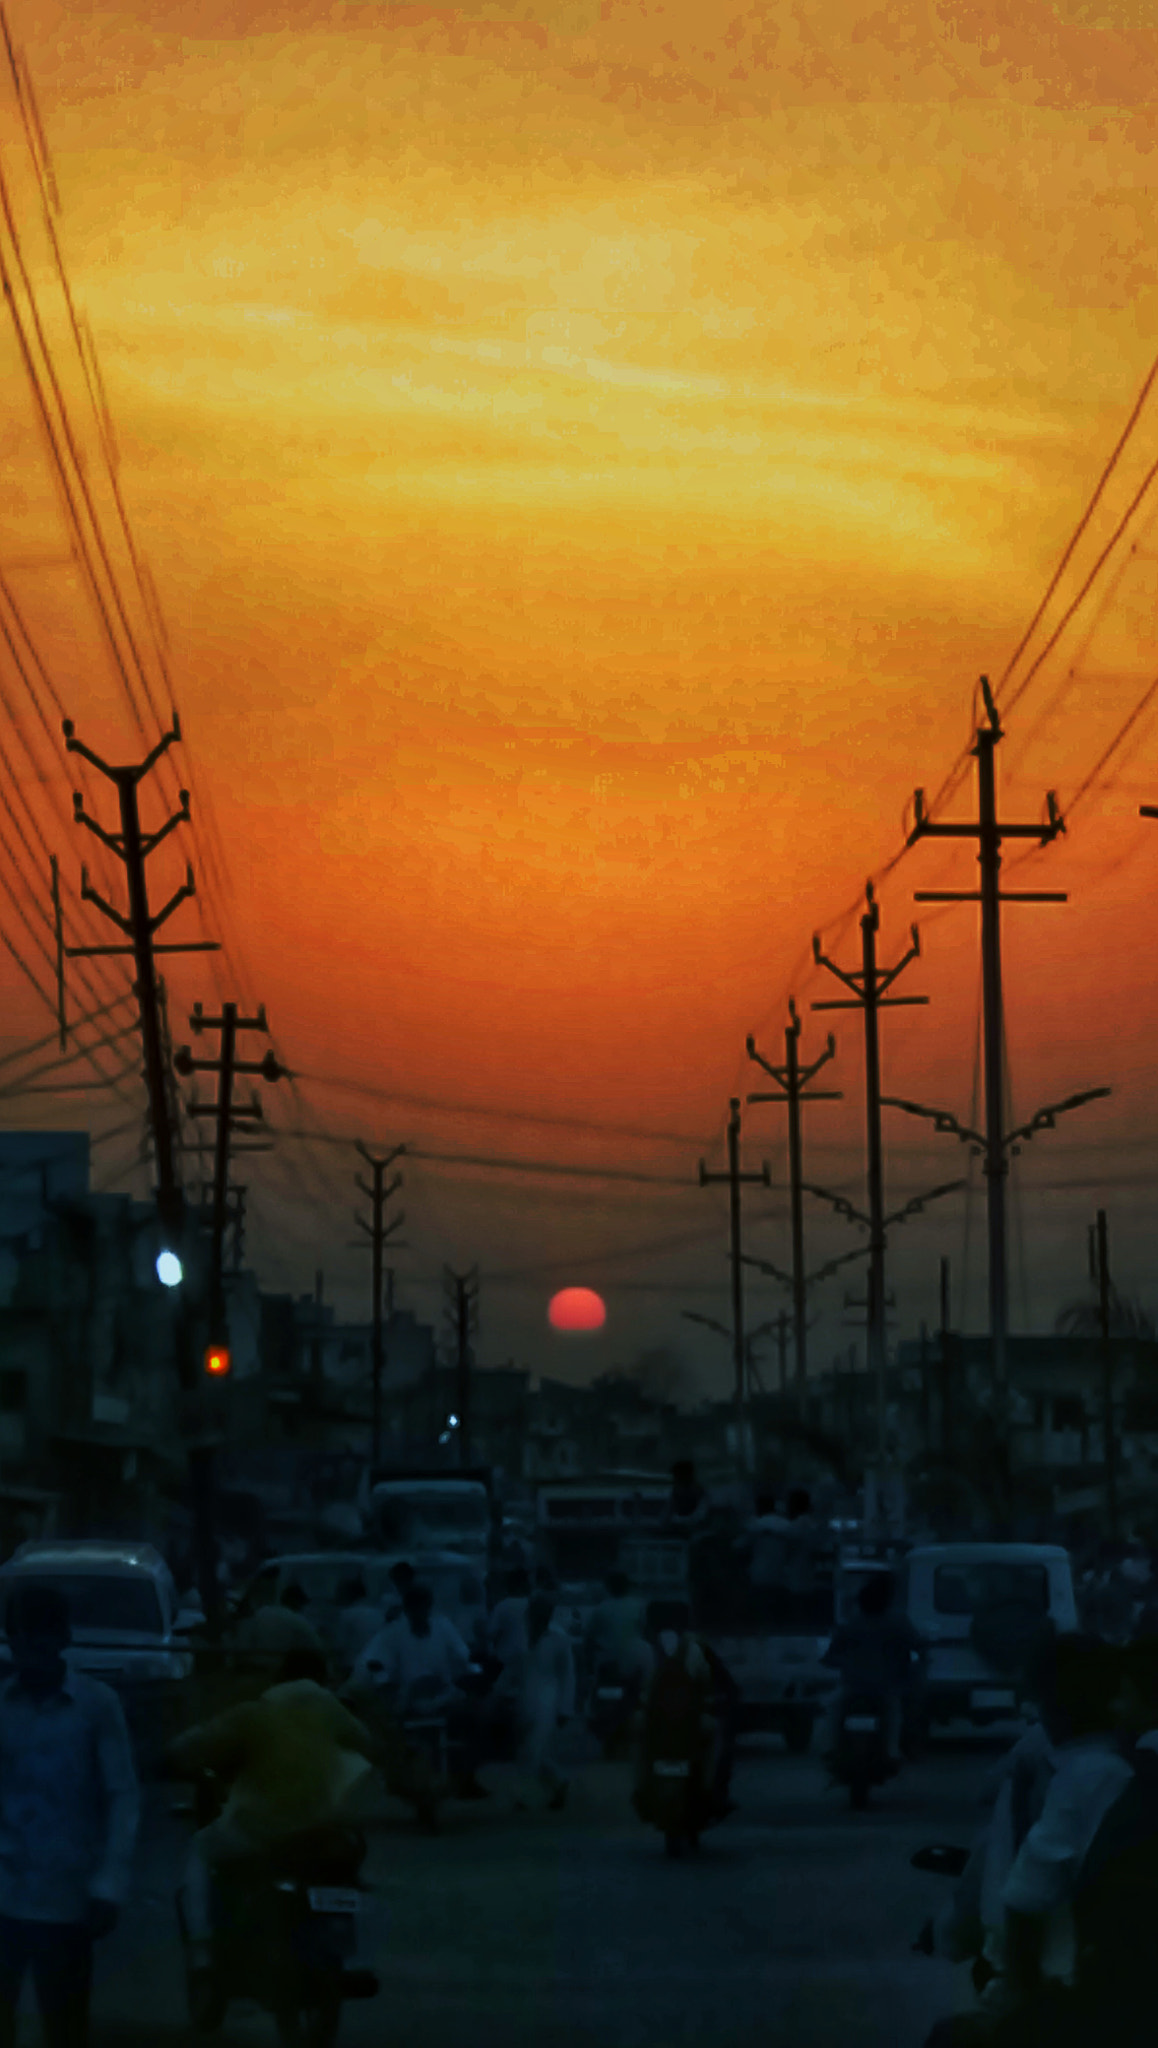 vivo 1601 sample photo. Sunset photography